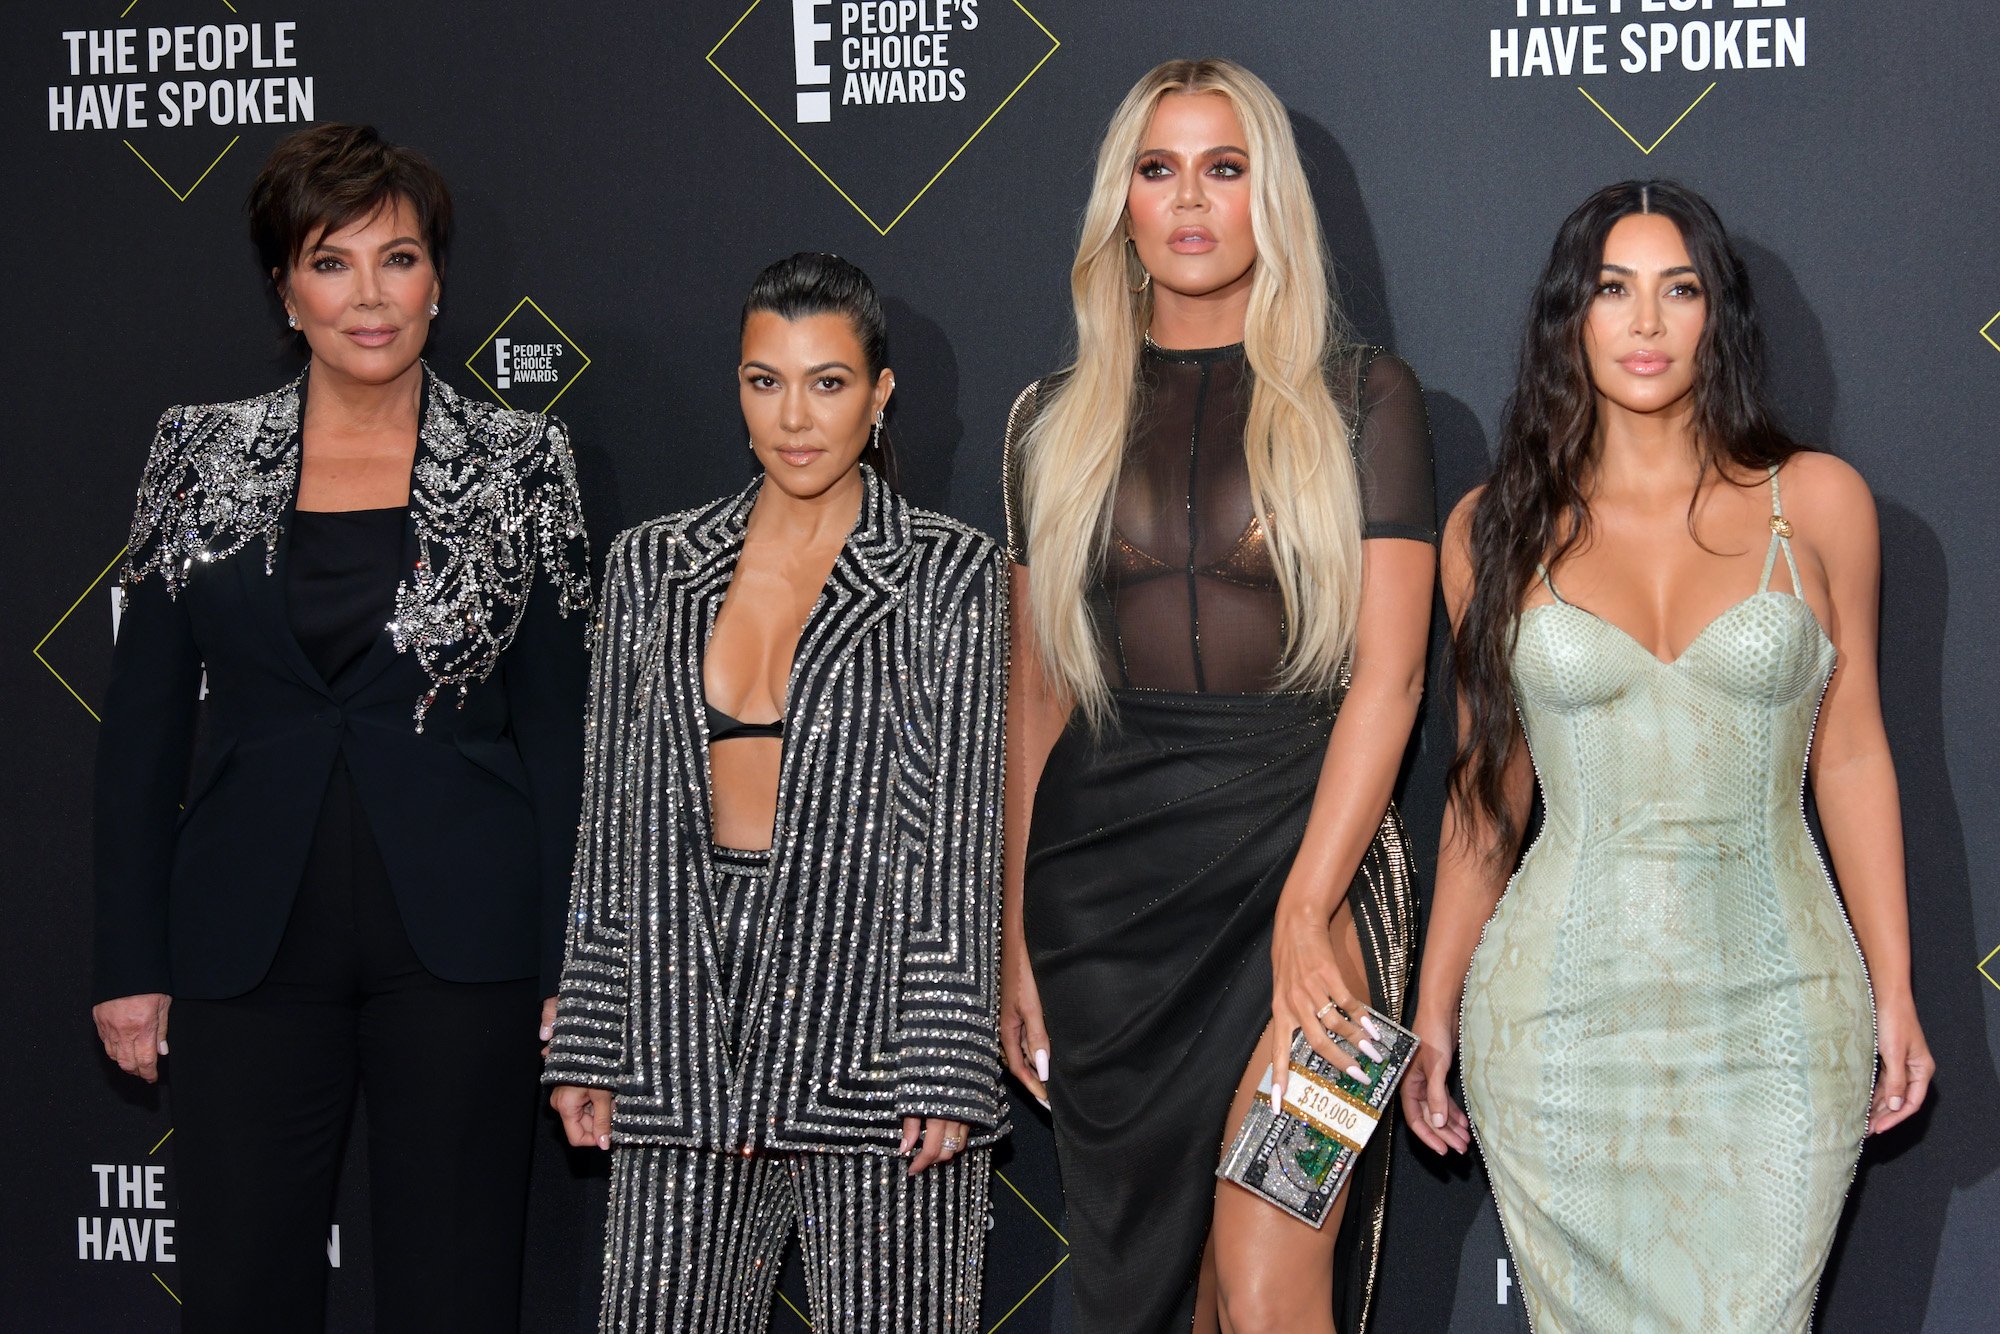 Kris Jenner, Kourtney Kardashian, Khloé Kardashian and Kim Kardashian 